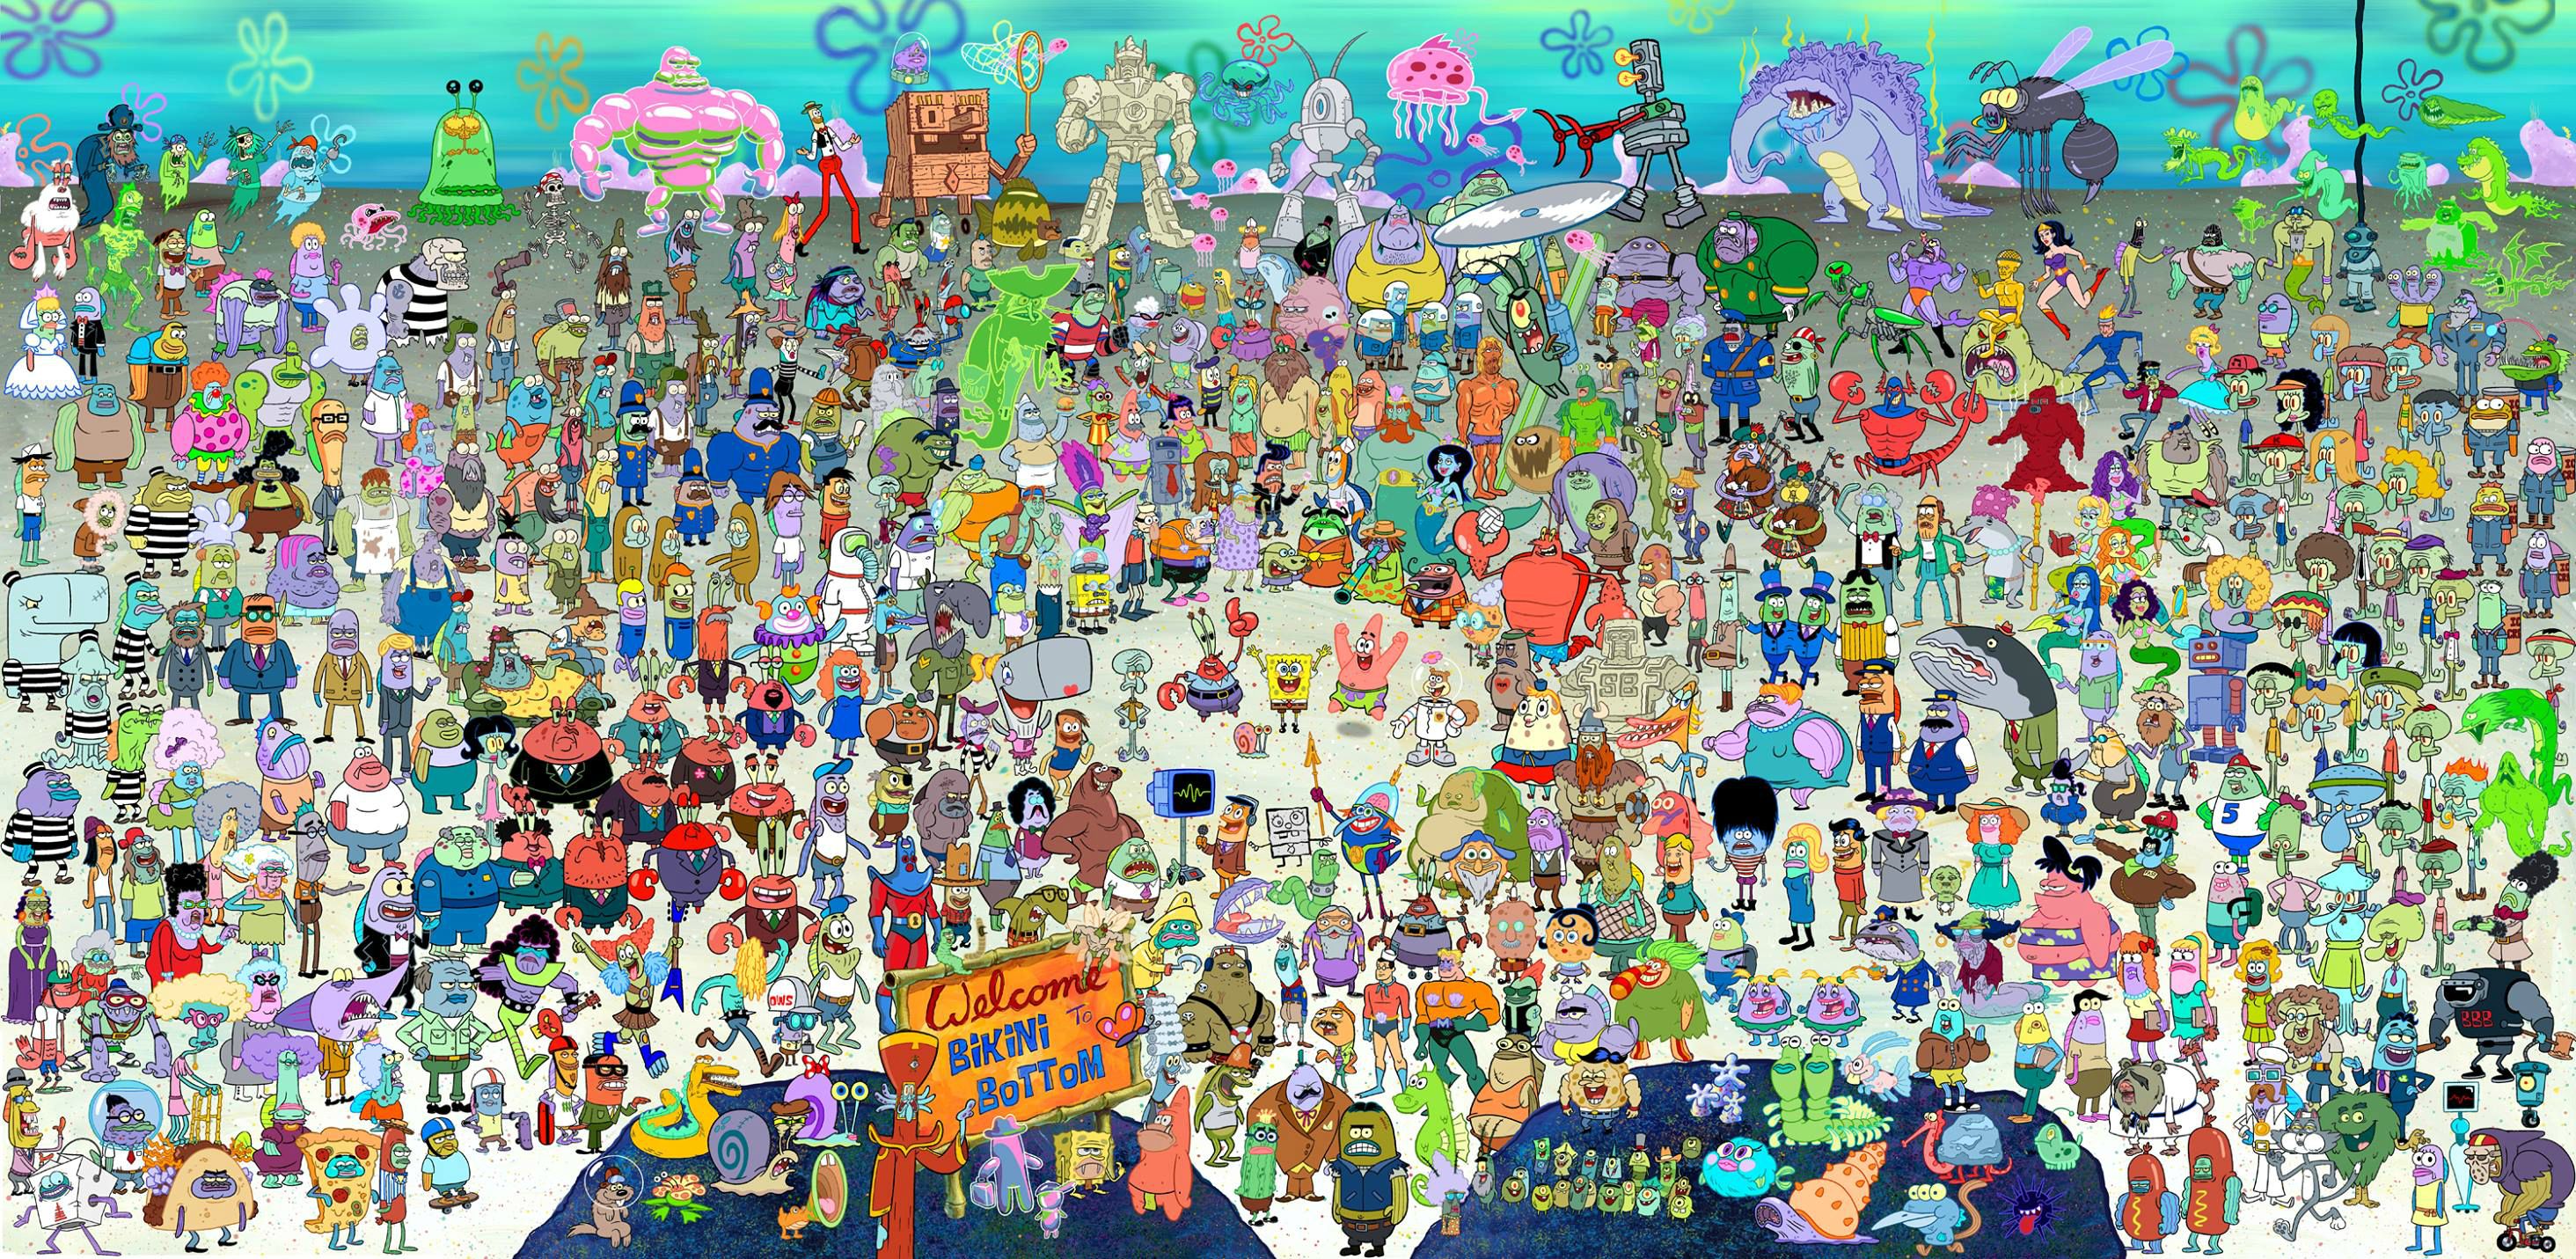 TV Show Spongebob Squarepants HD Wallpaper | Background Image